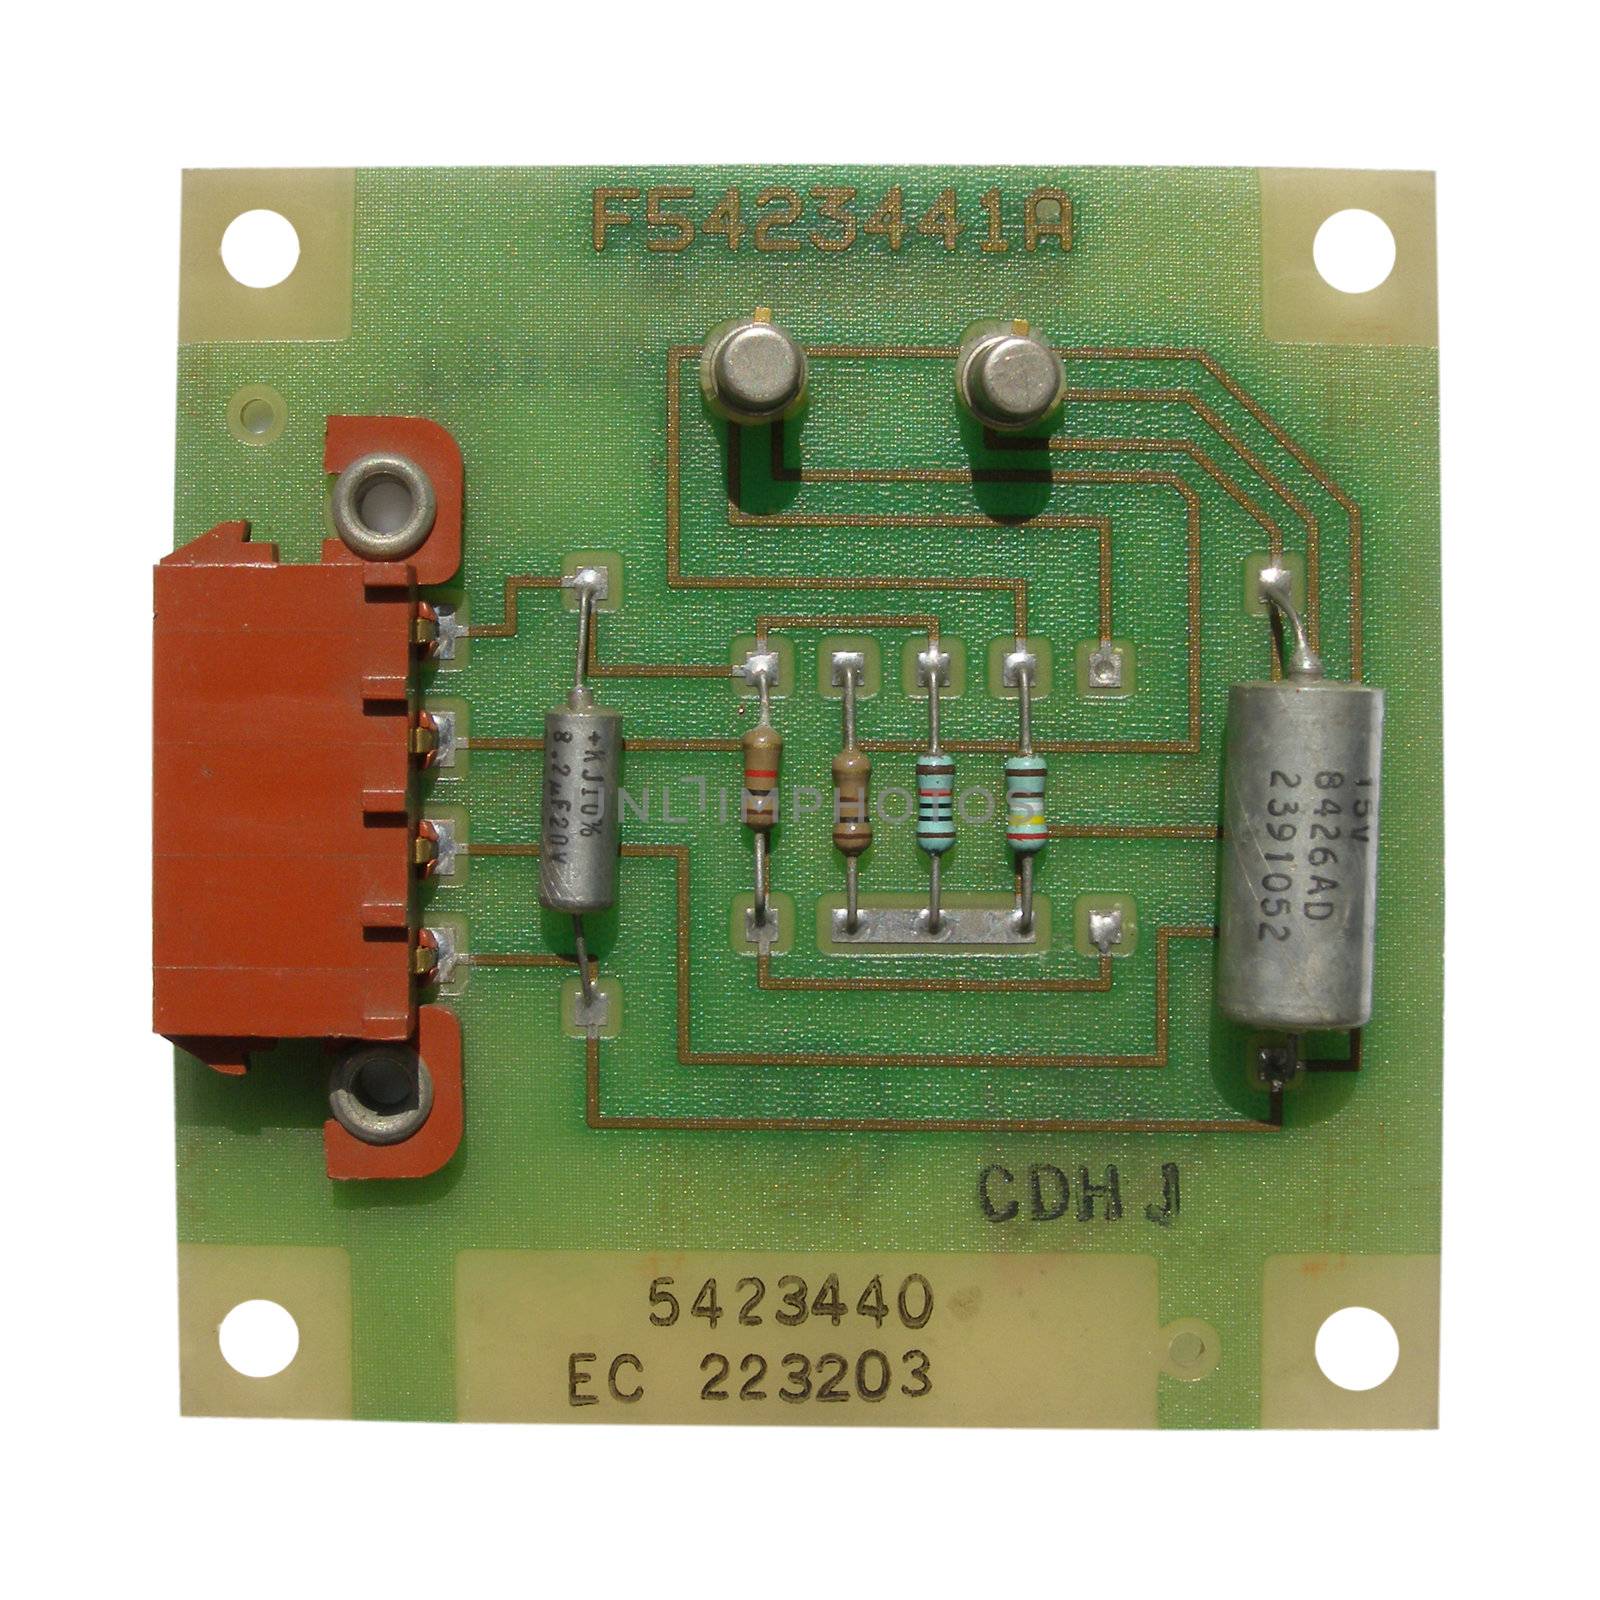 Printed circuit by claudiodivizia